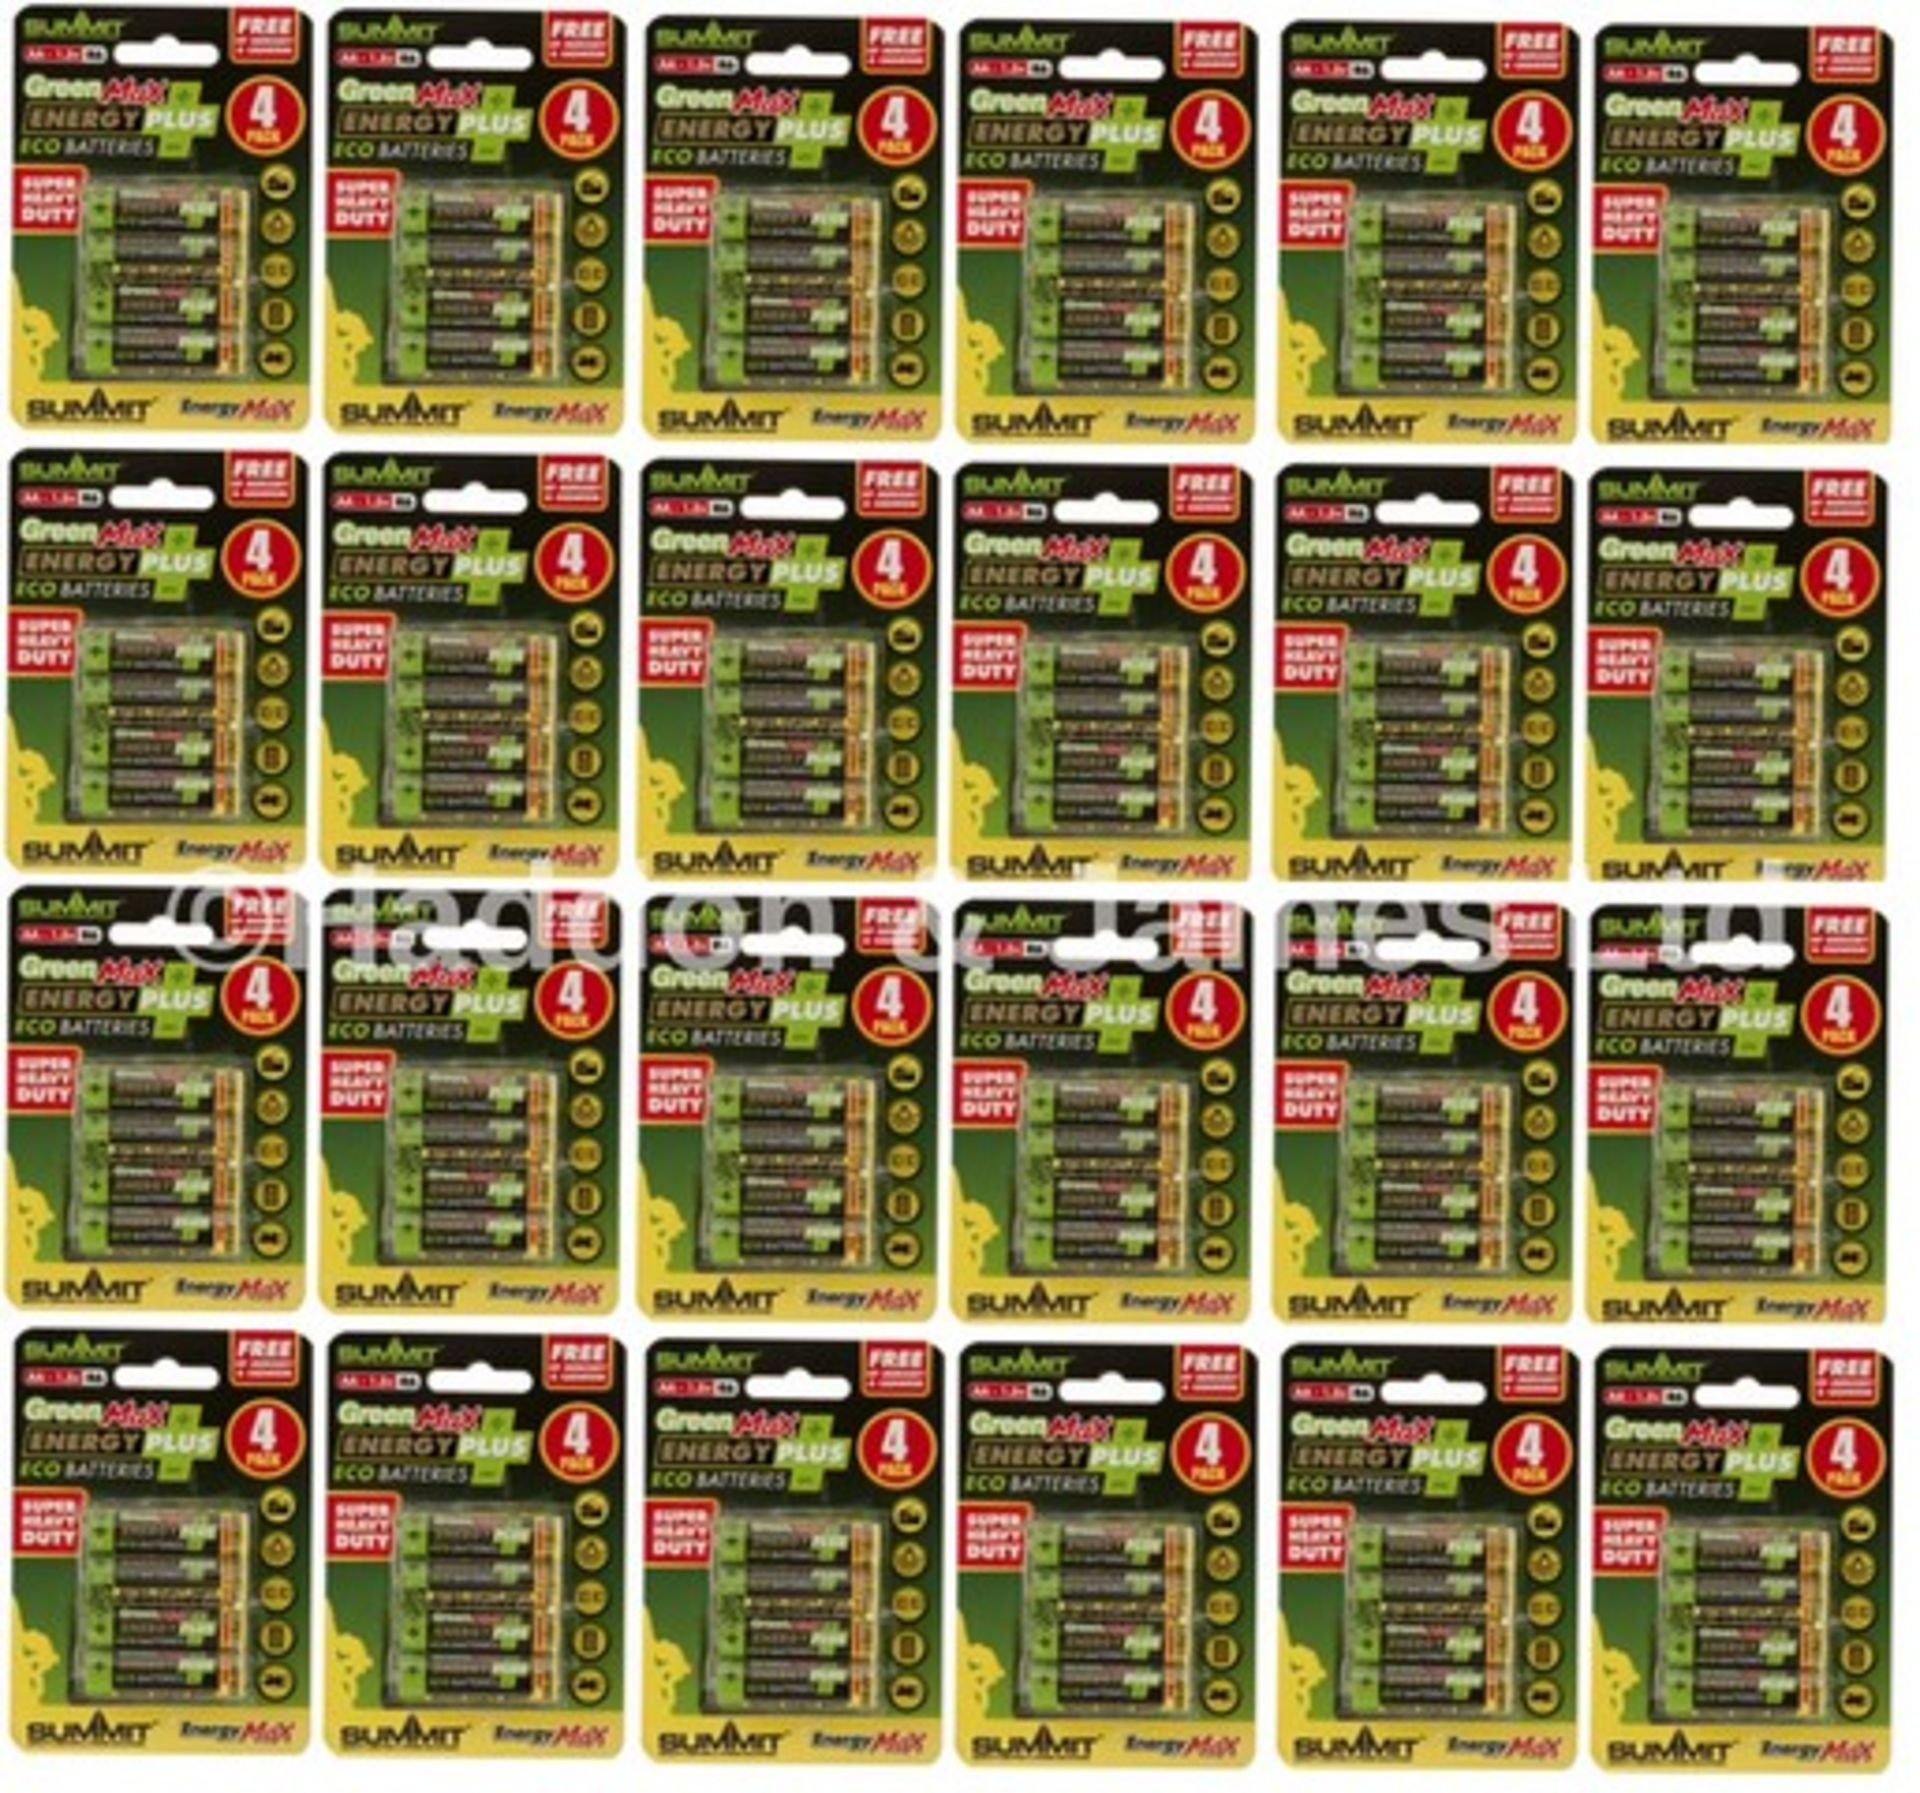 V Brand New Ninety Six Energy Plus Batteries (24 Cards Of 4)